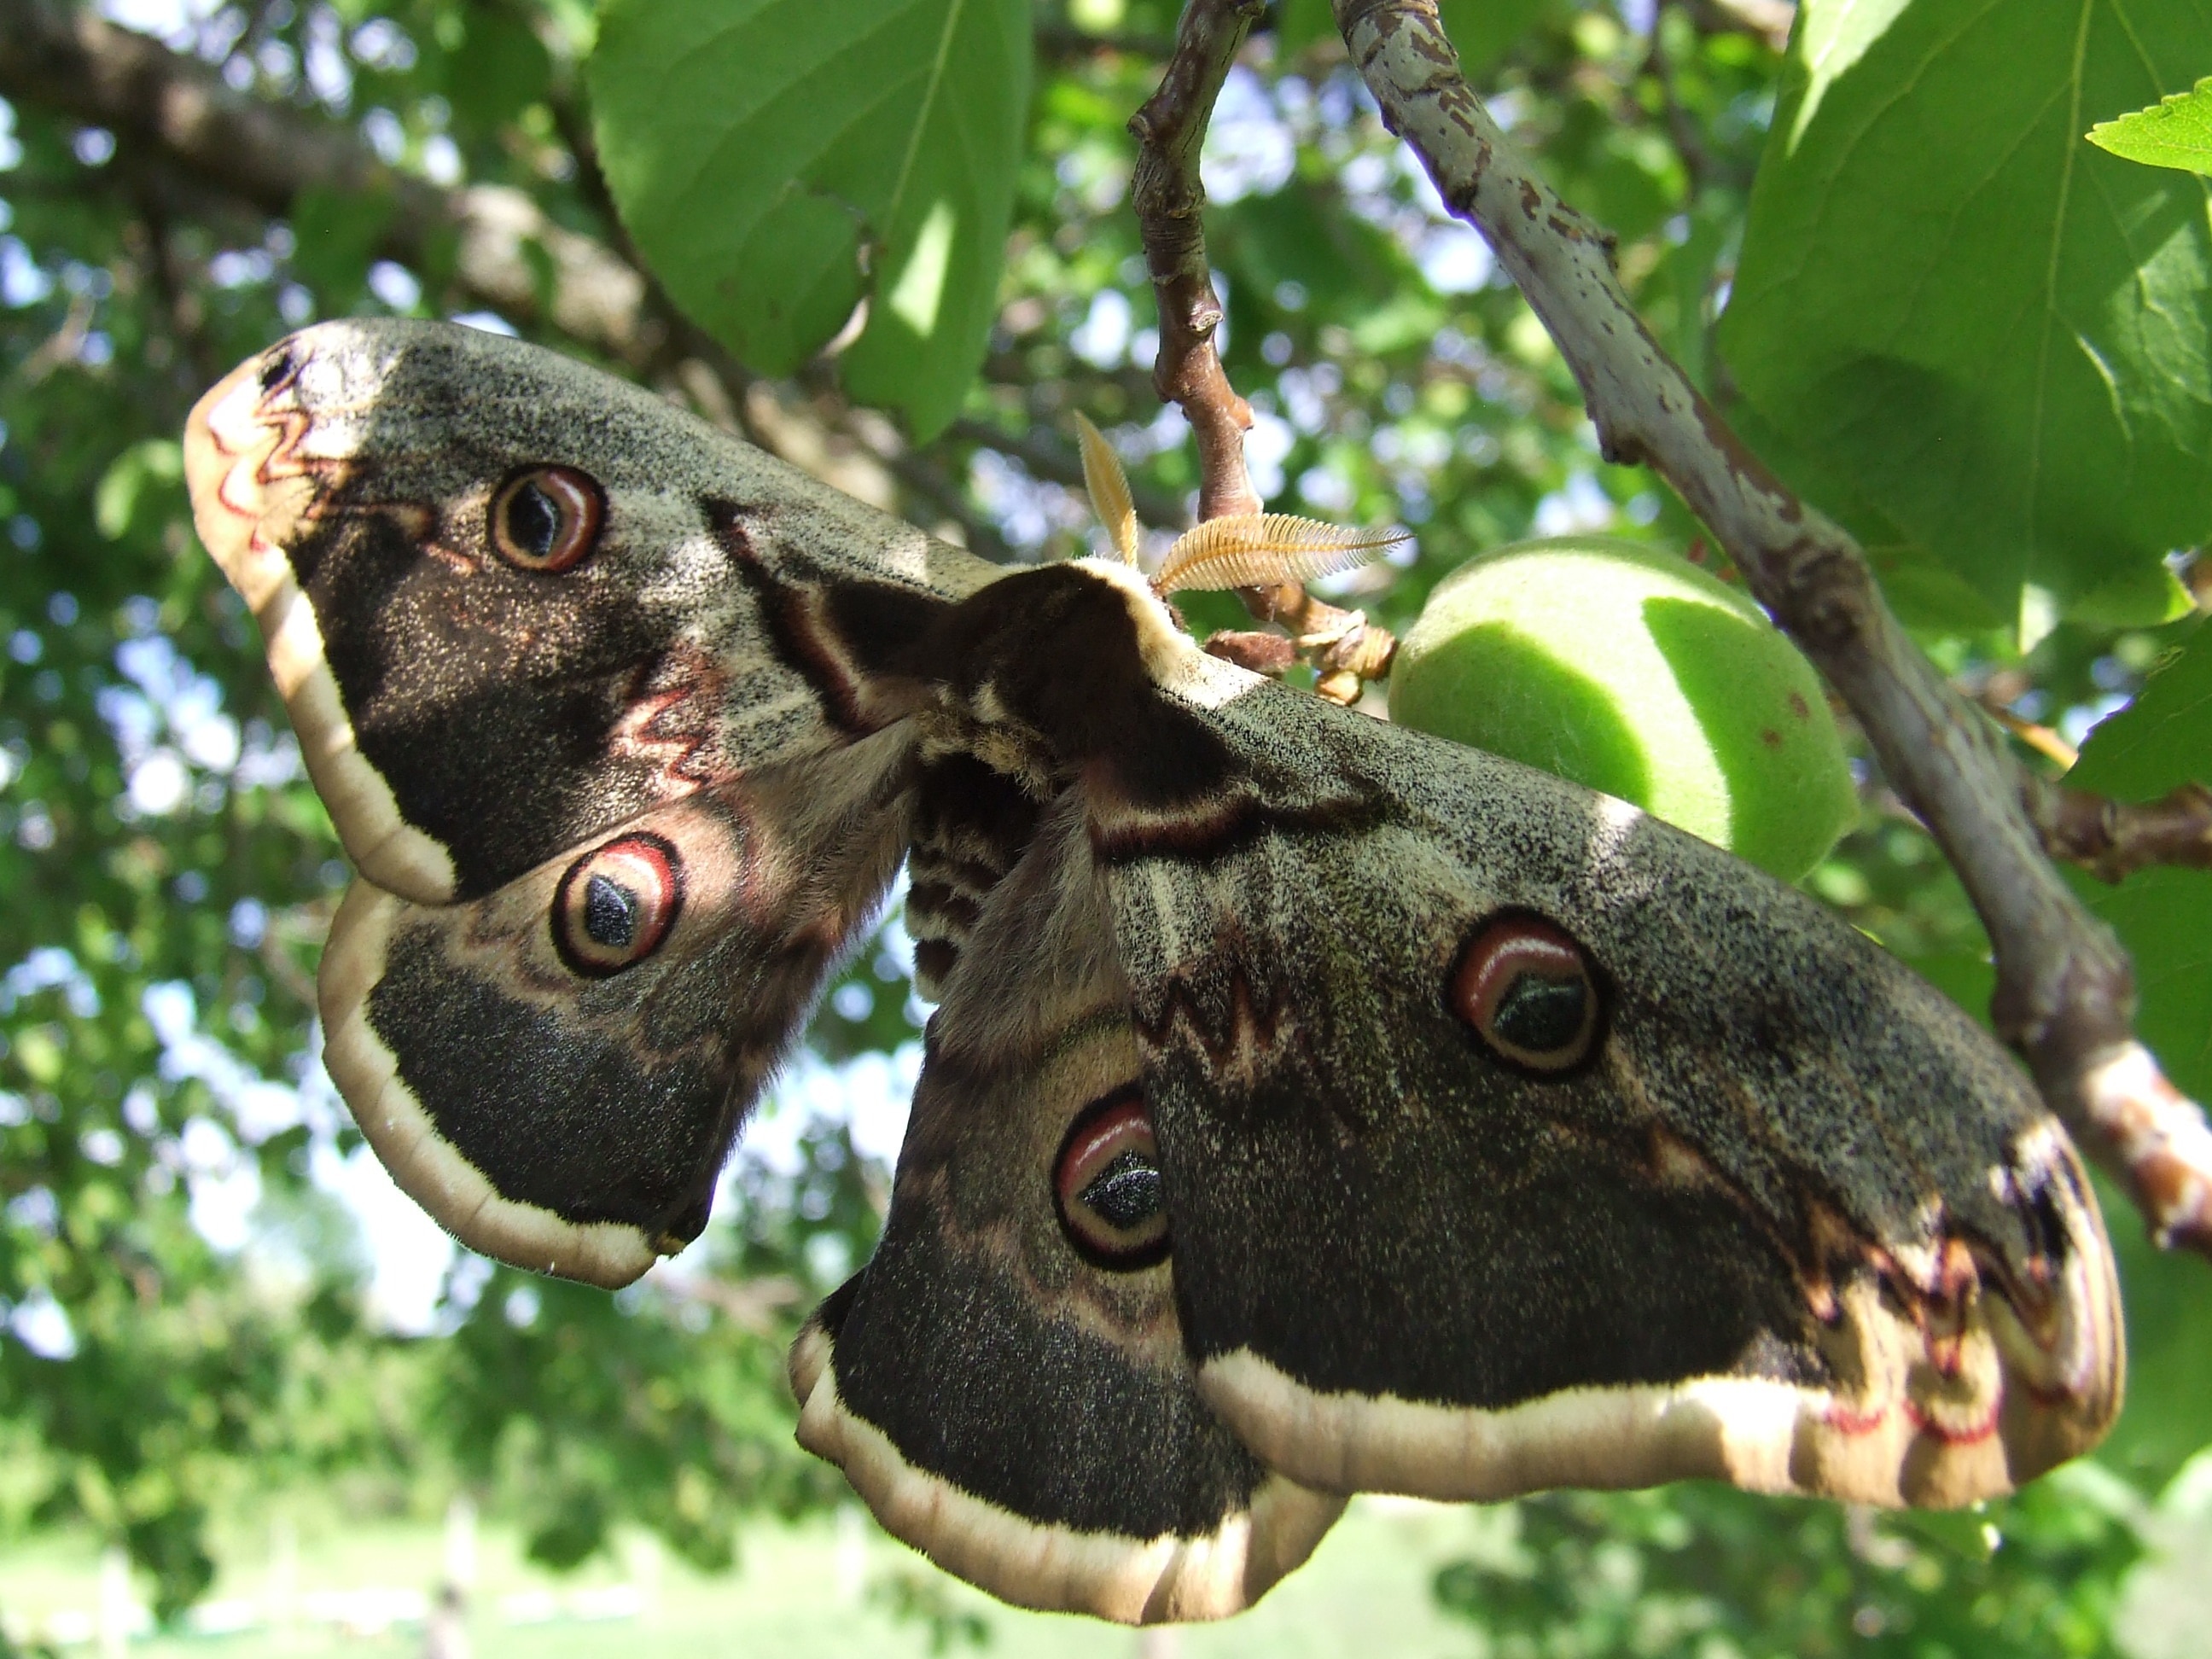 Cecropia Moth on a branch closeup photo at daytime